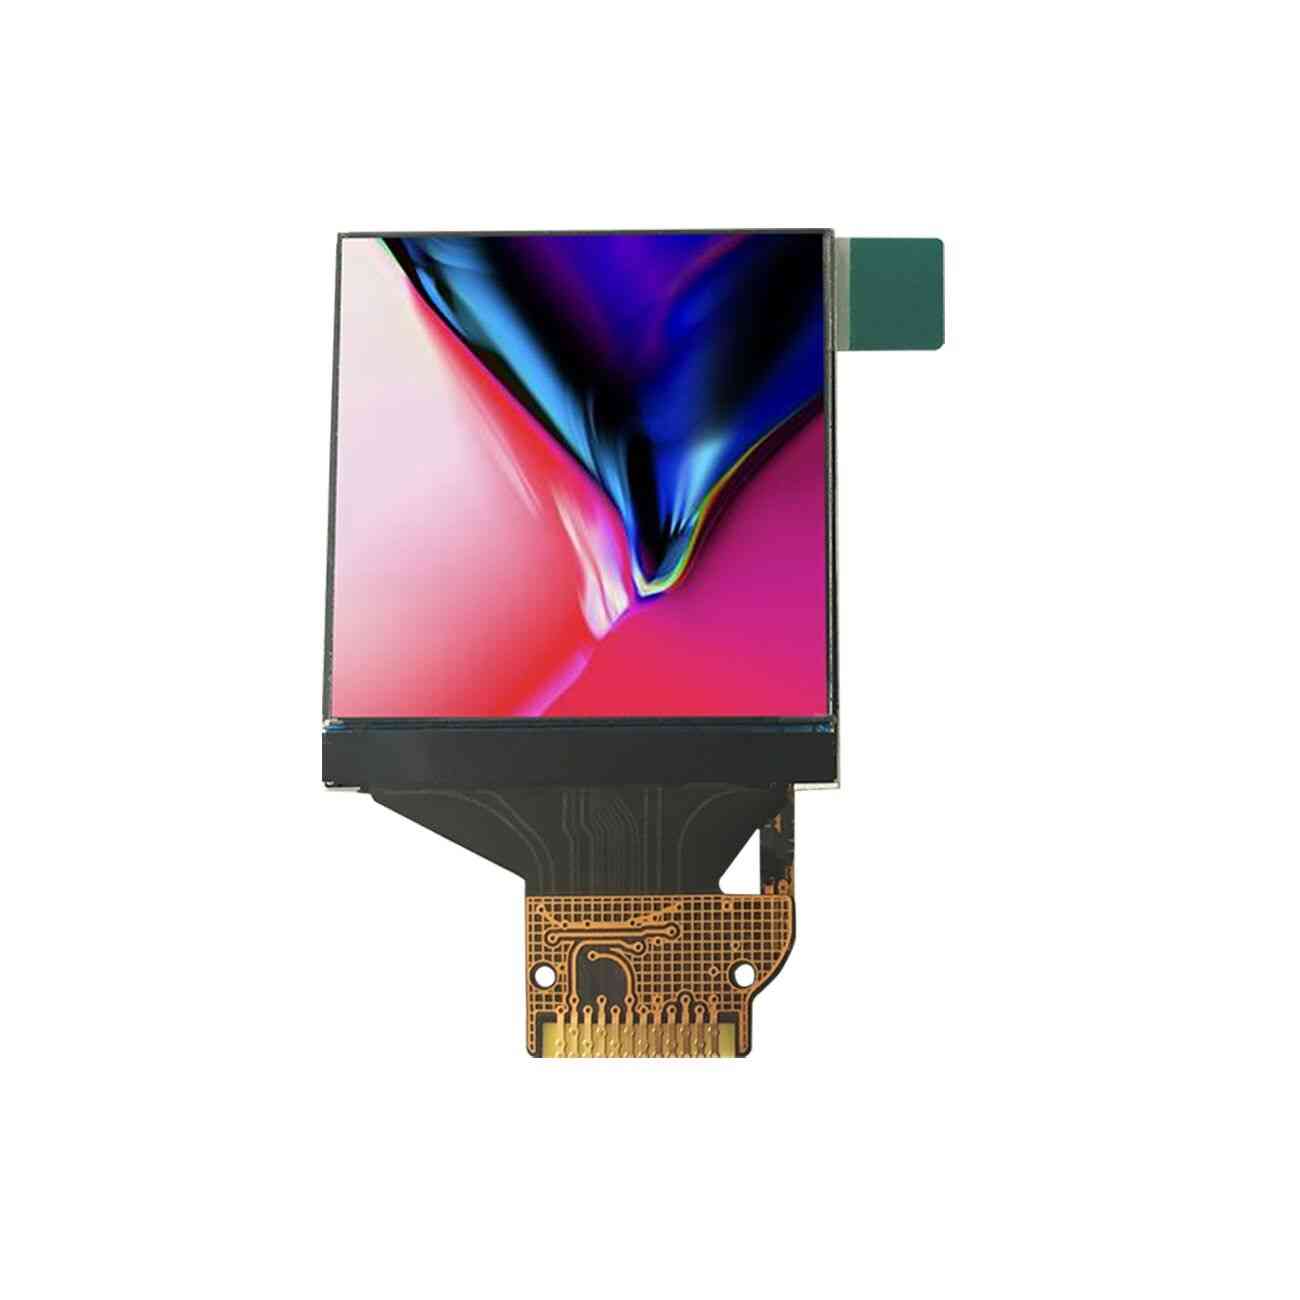 Ips 12-pin, Spi Hd, Full Color, Tft Display Screen, Drive Ic